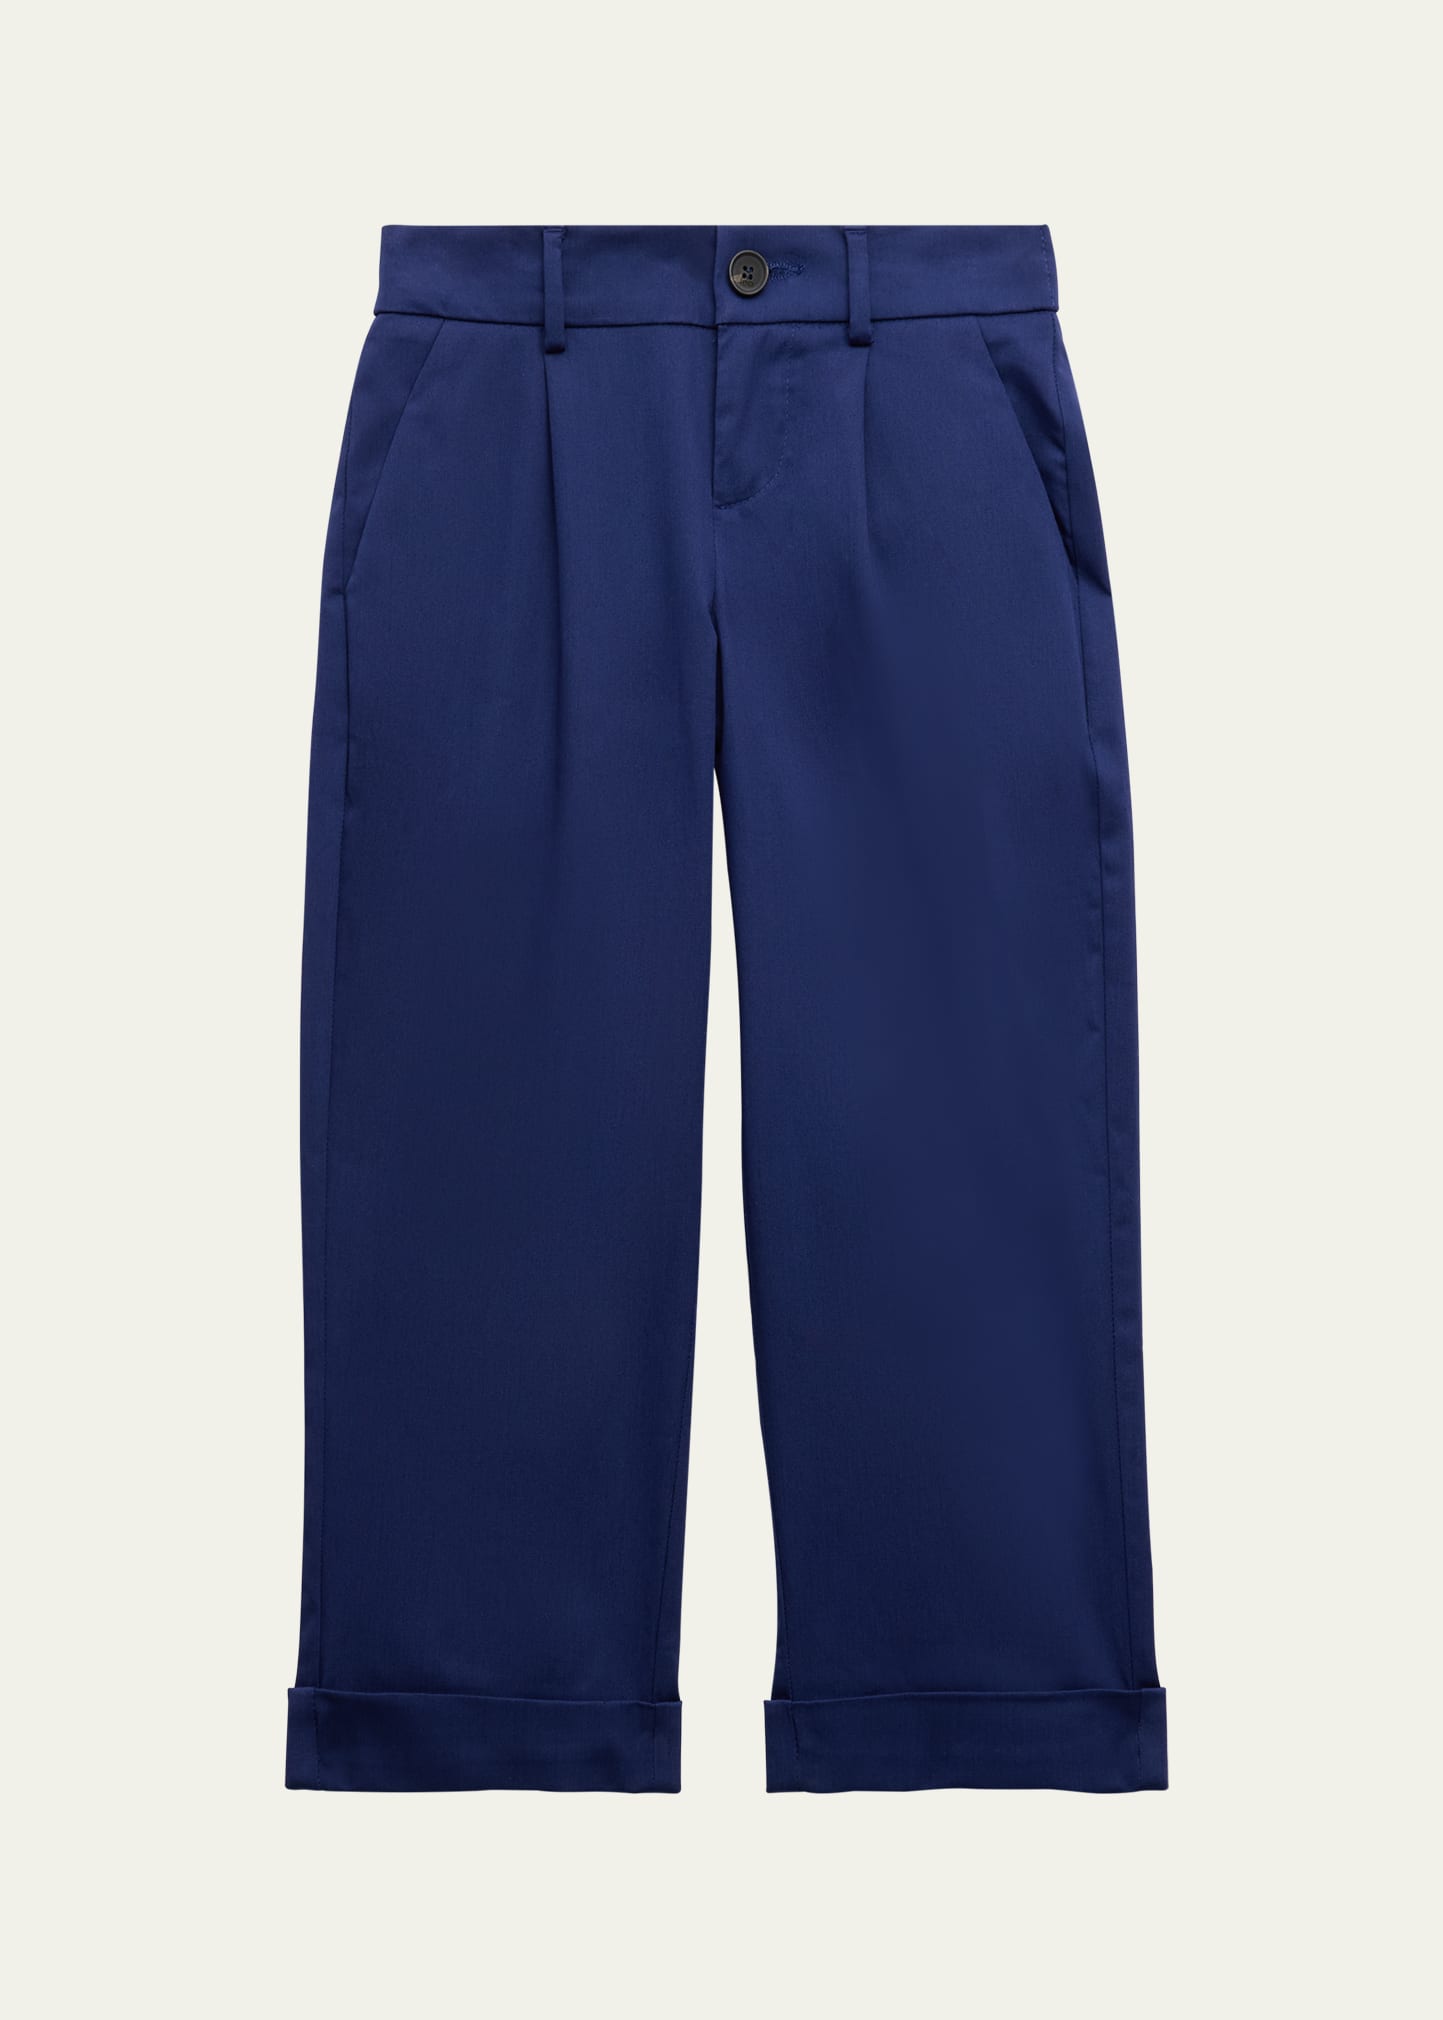 Boy's Denim Jeans with Back FF Logo Patch, Size 6M-24M